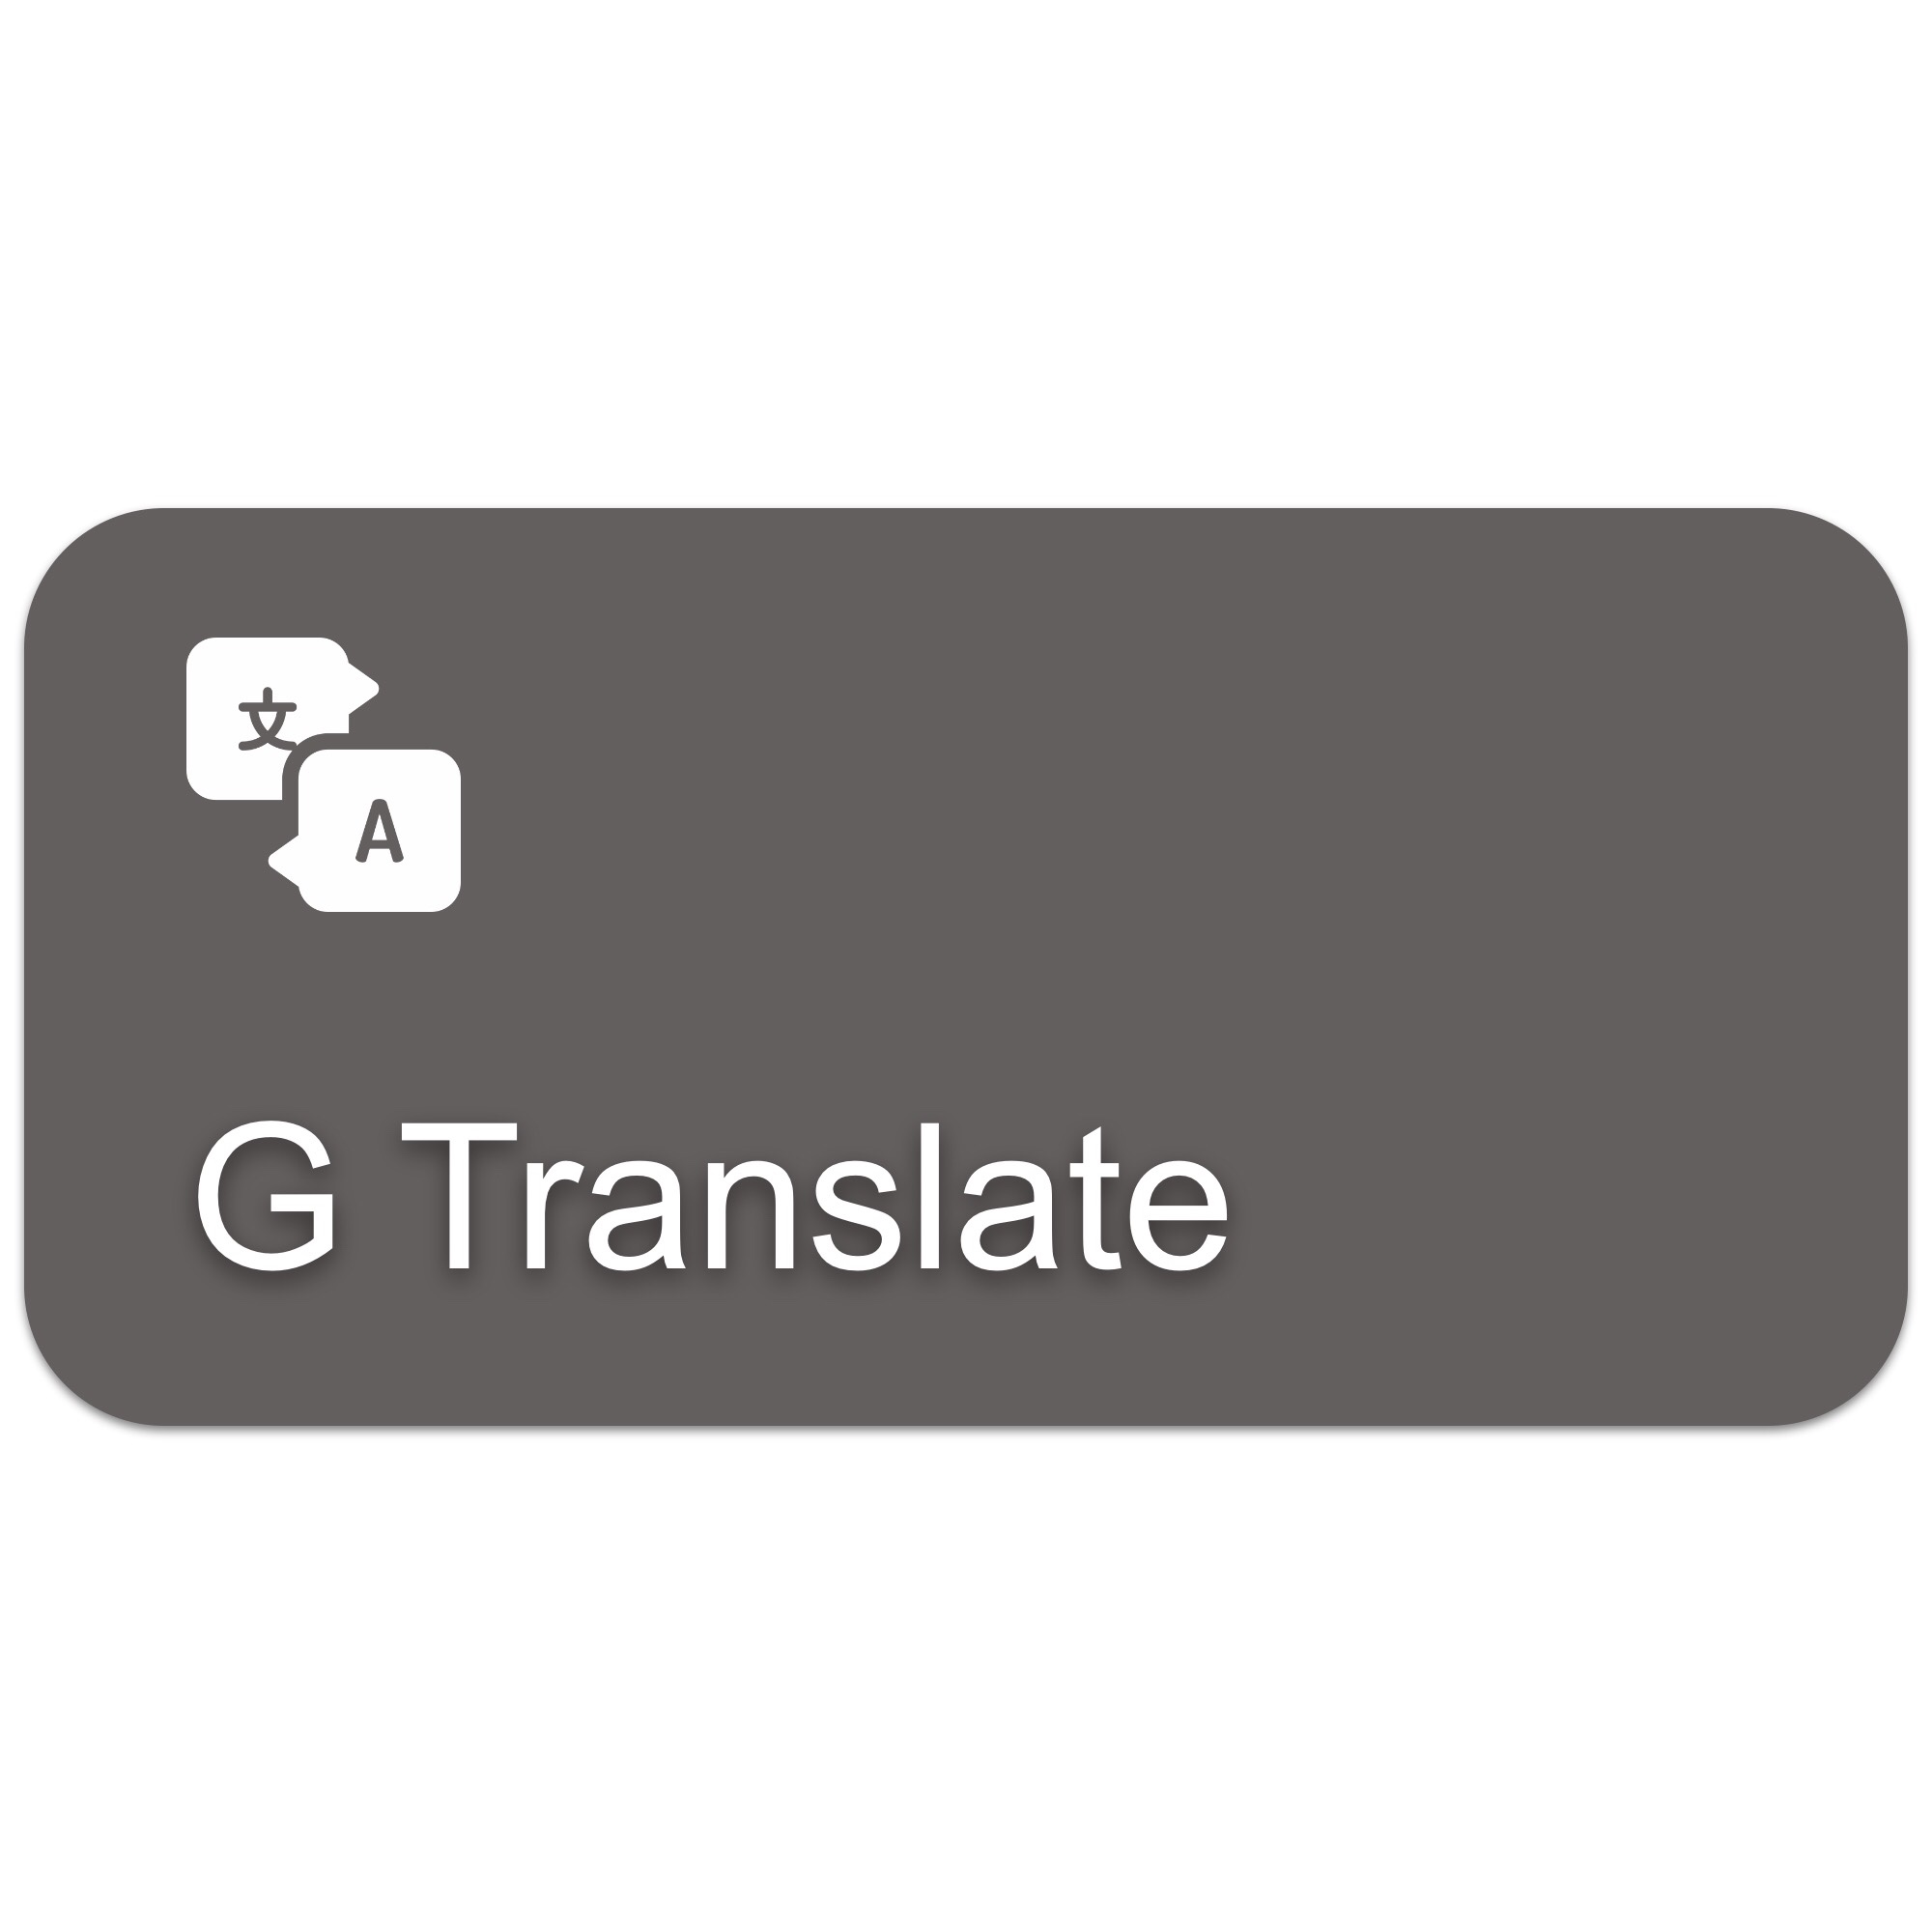 4g перевод. Gg Translate. PDNOB image Translator.